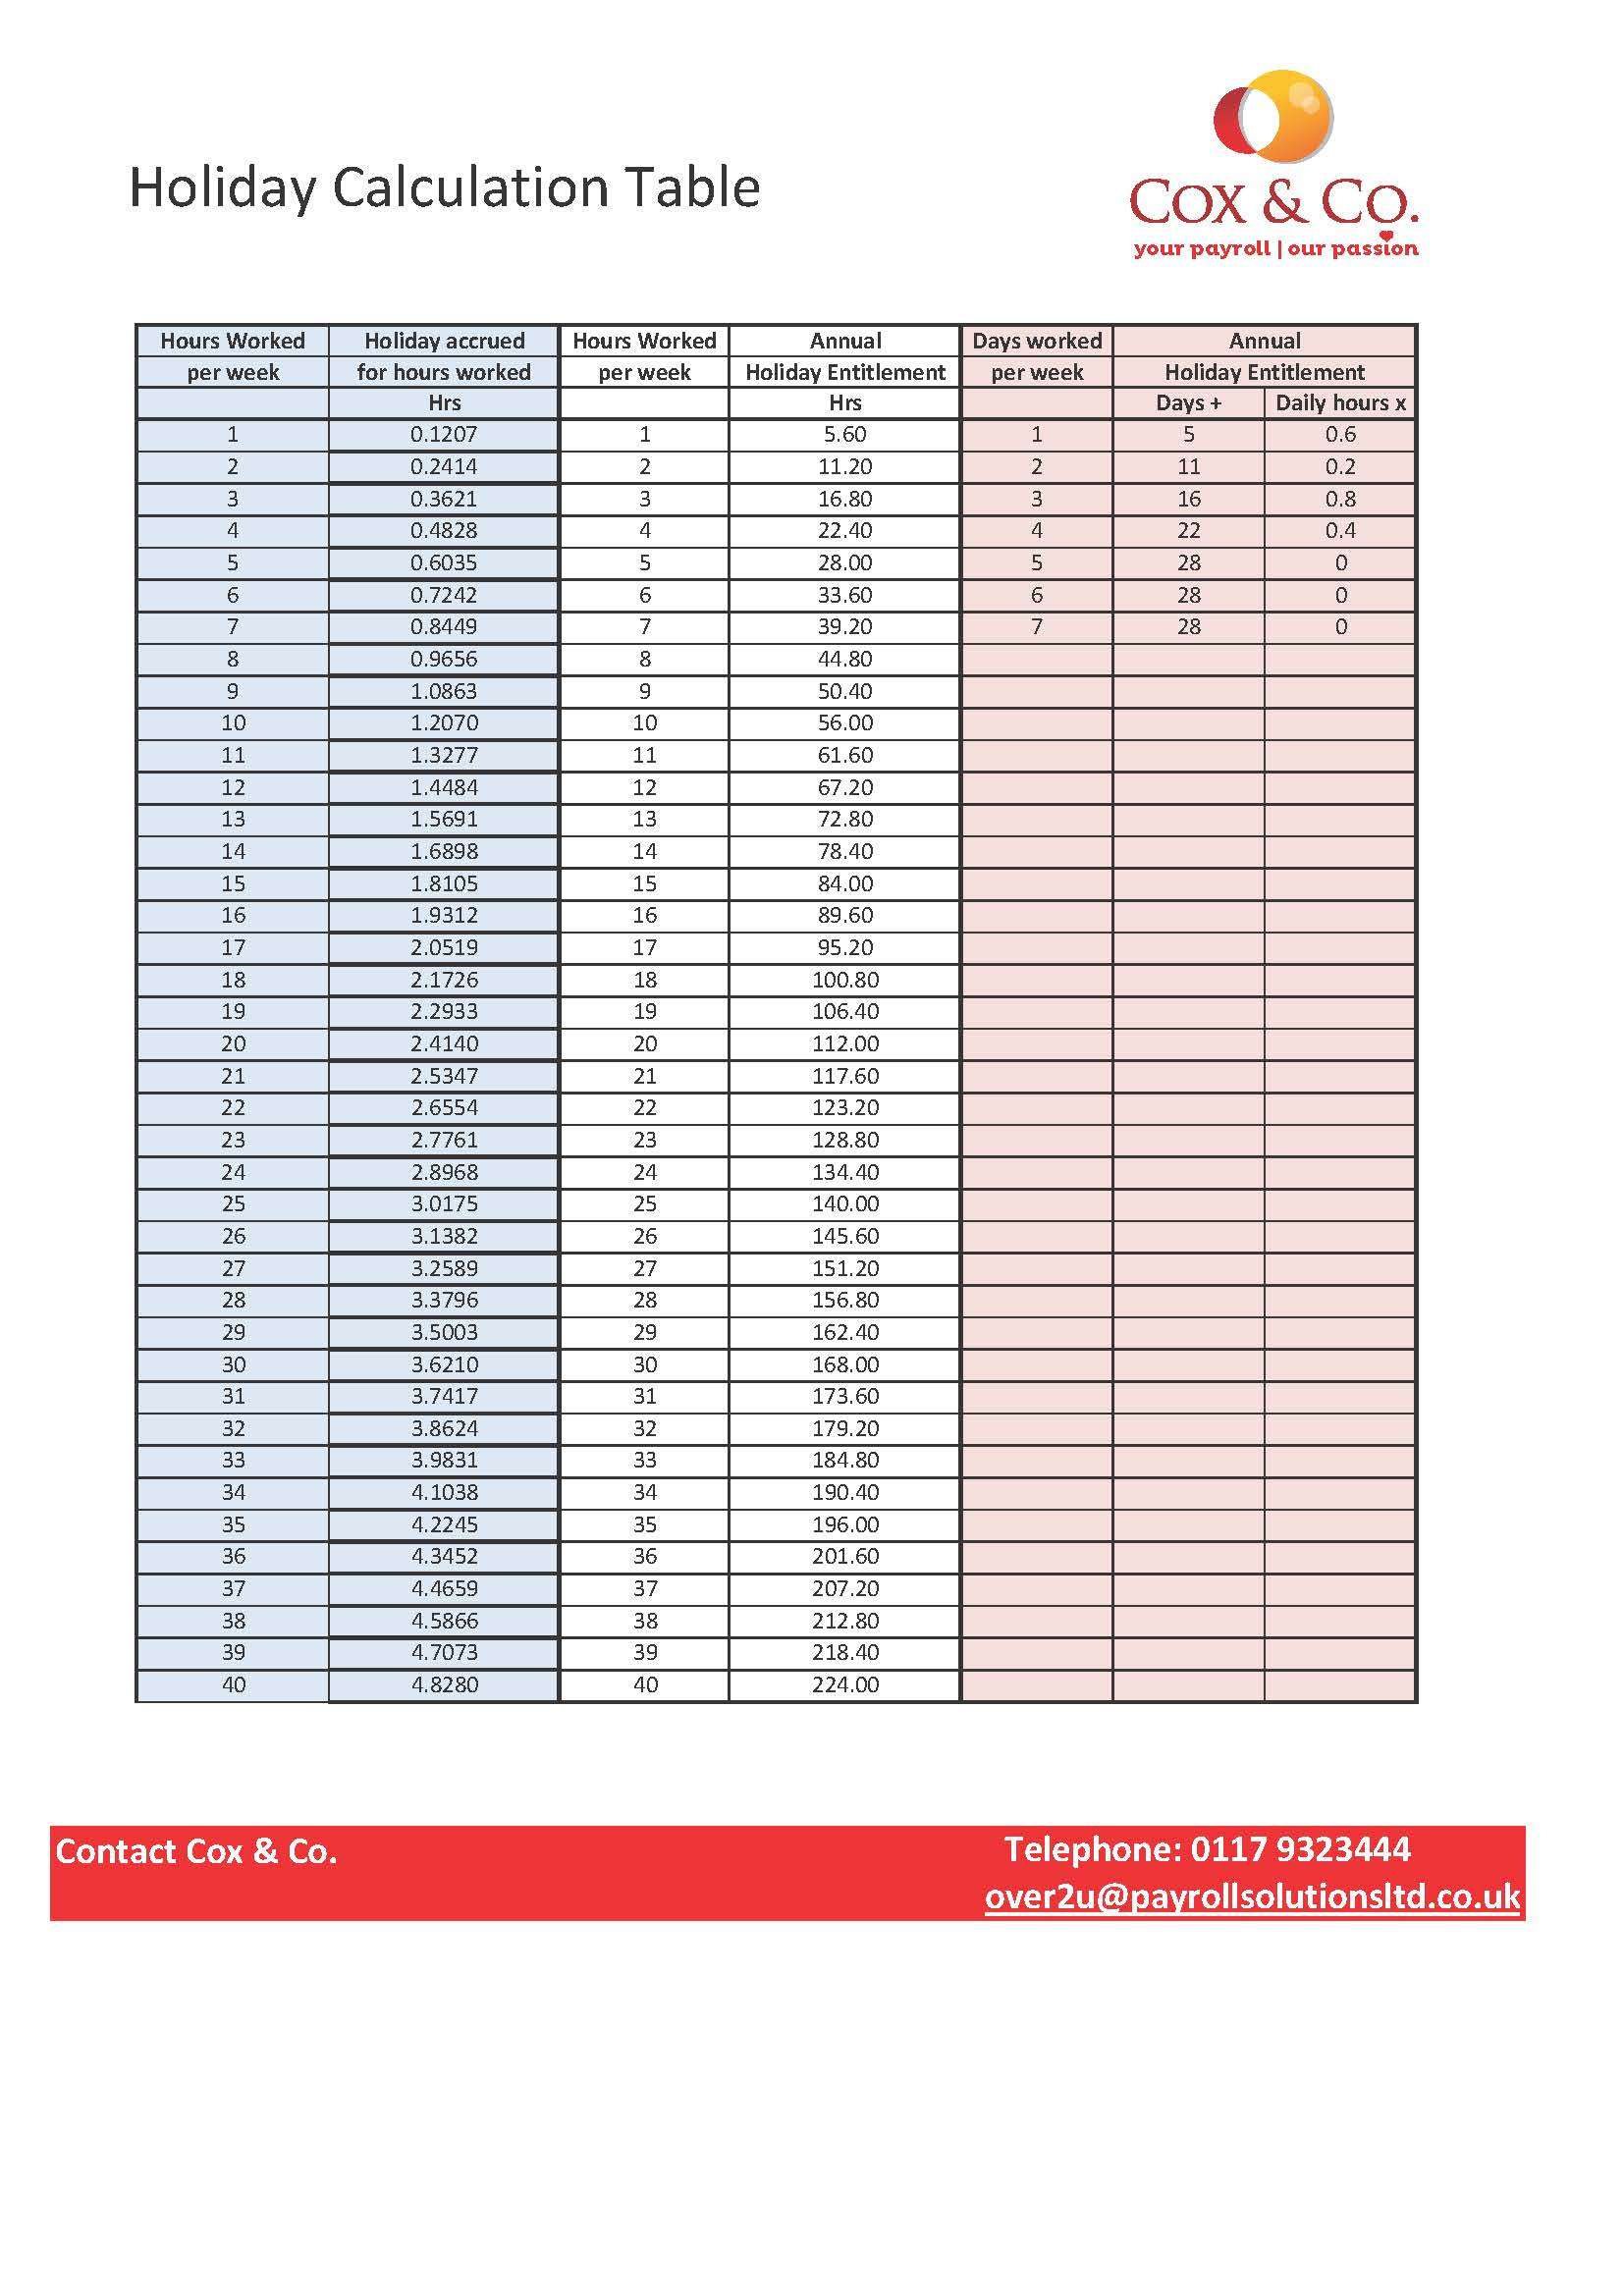 Holiday Calculator Spreadsheet Regarding Holiday Calculation Table